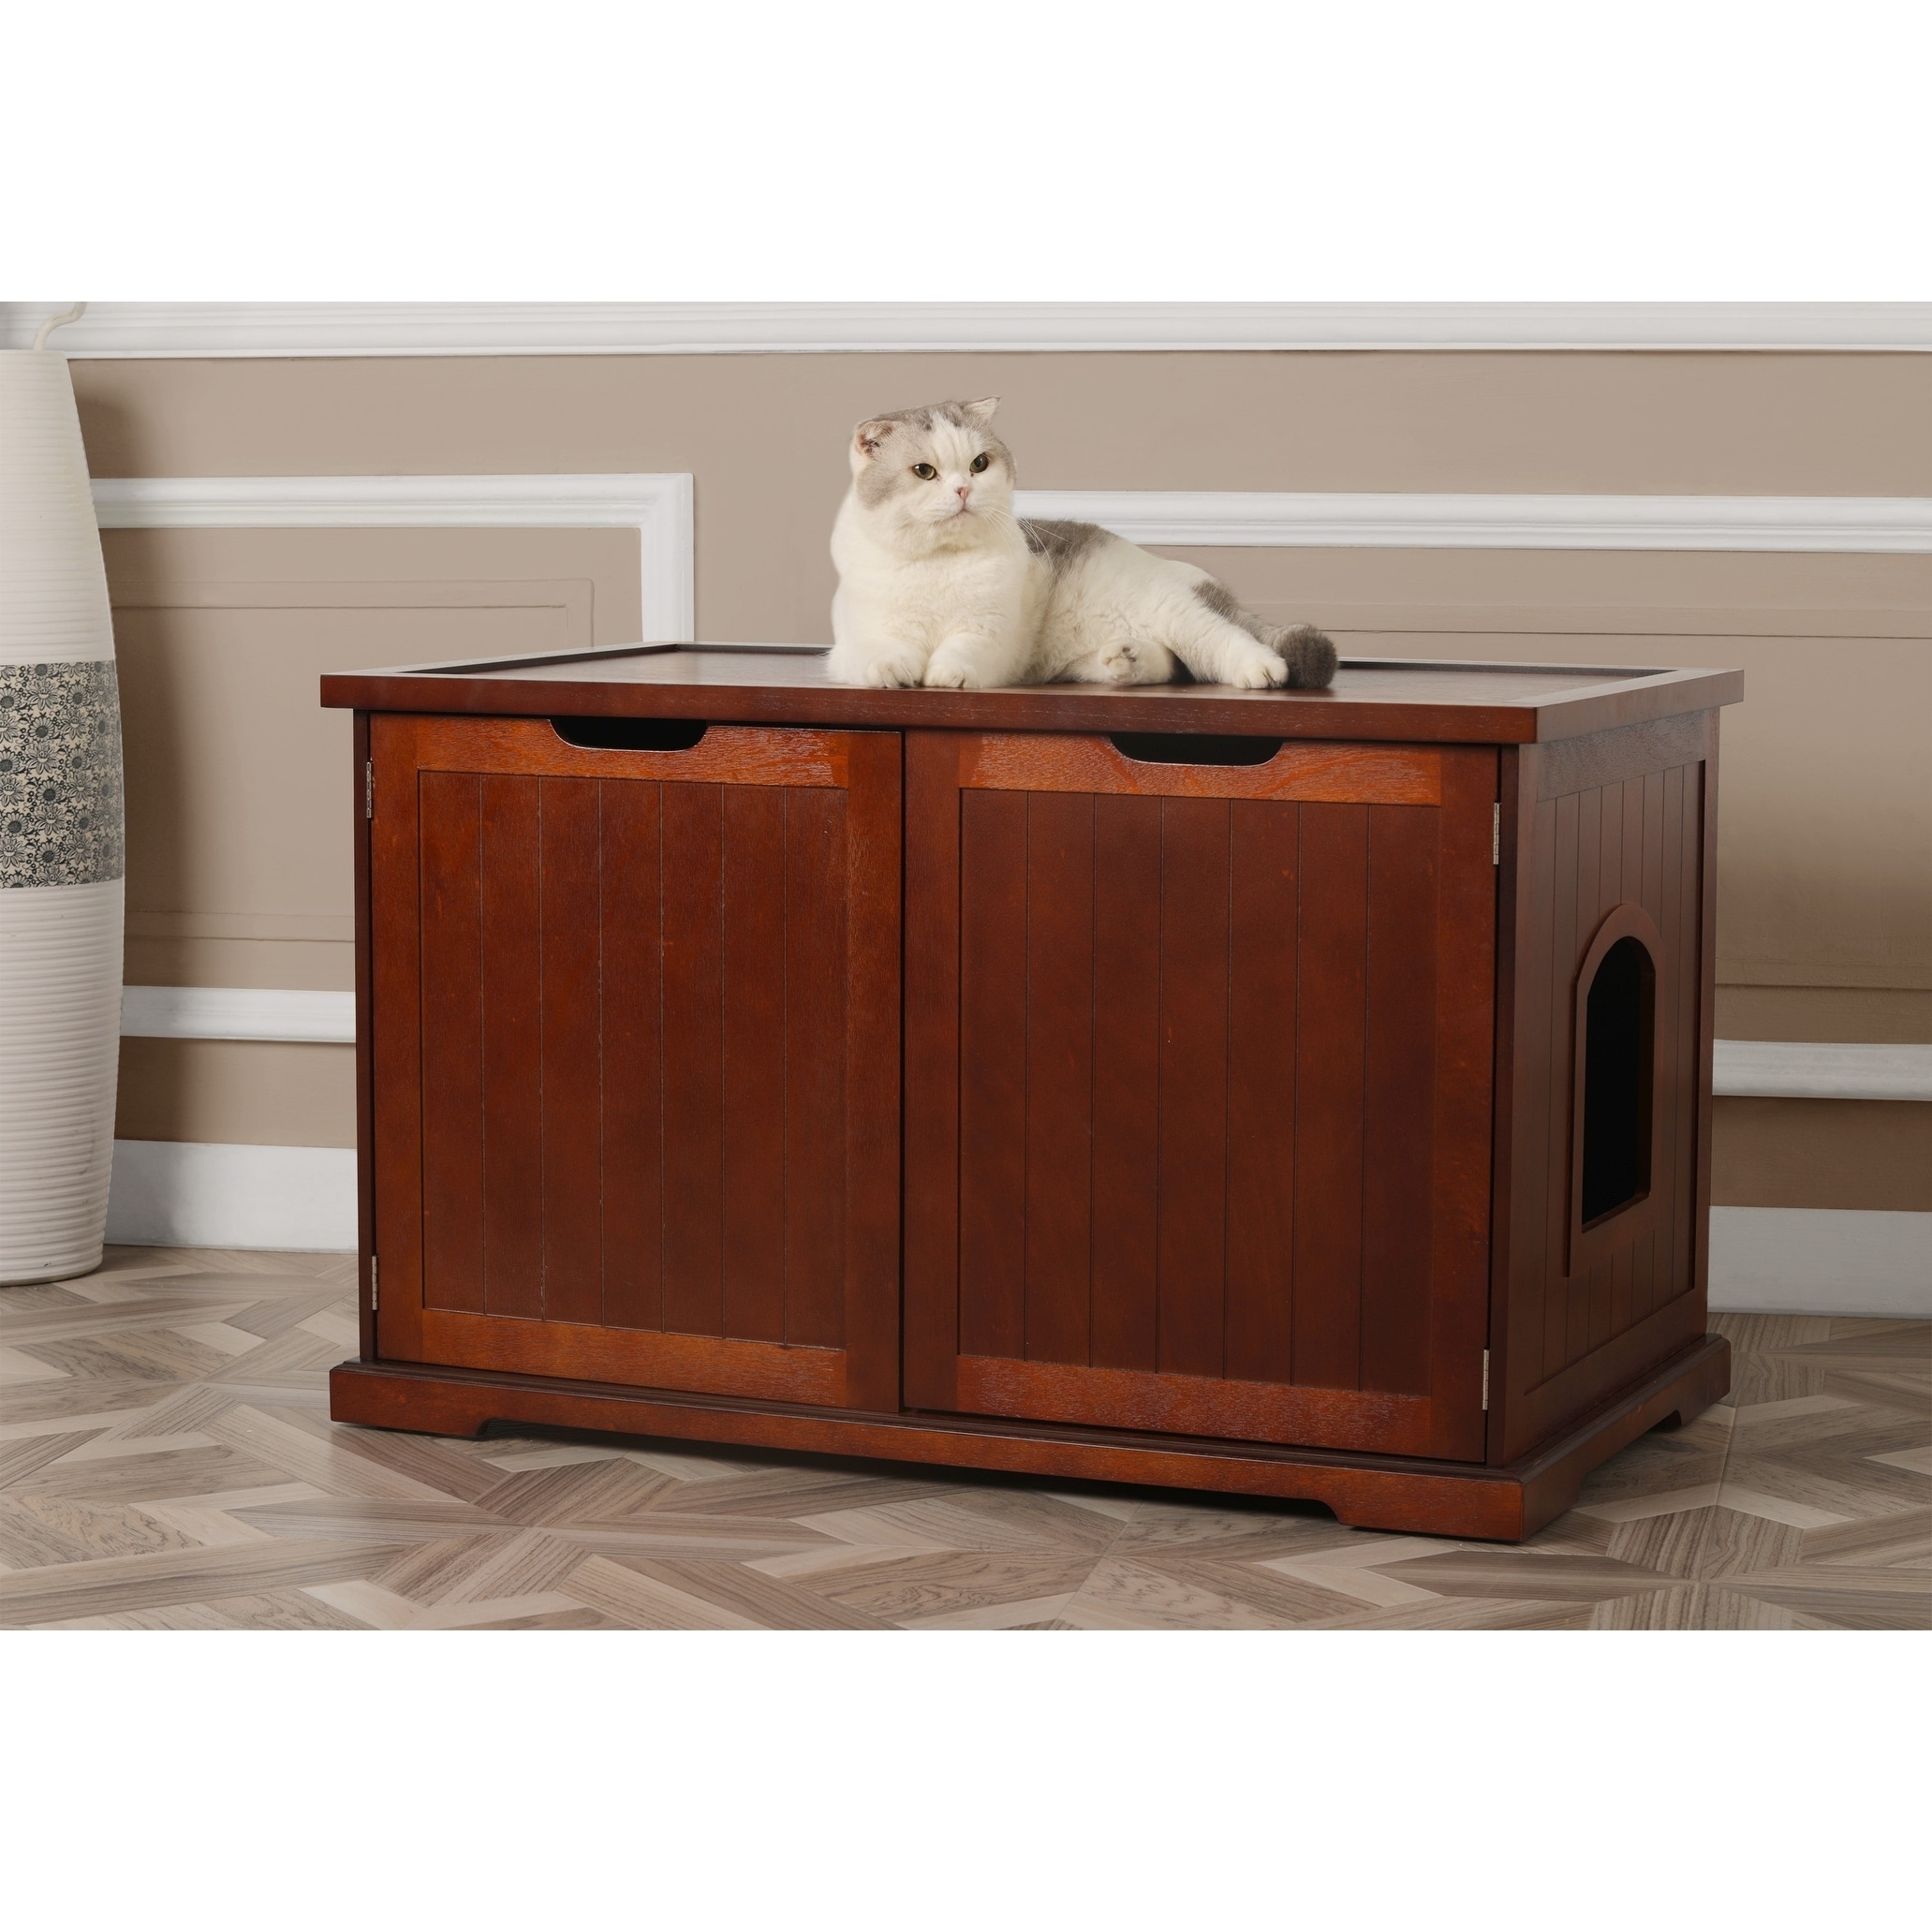 Merry Products Walnut Cat Hidden Litter Box Furniture Bench Bf02c440 9a5b 4cc8 Abfb 184f633c9138 